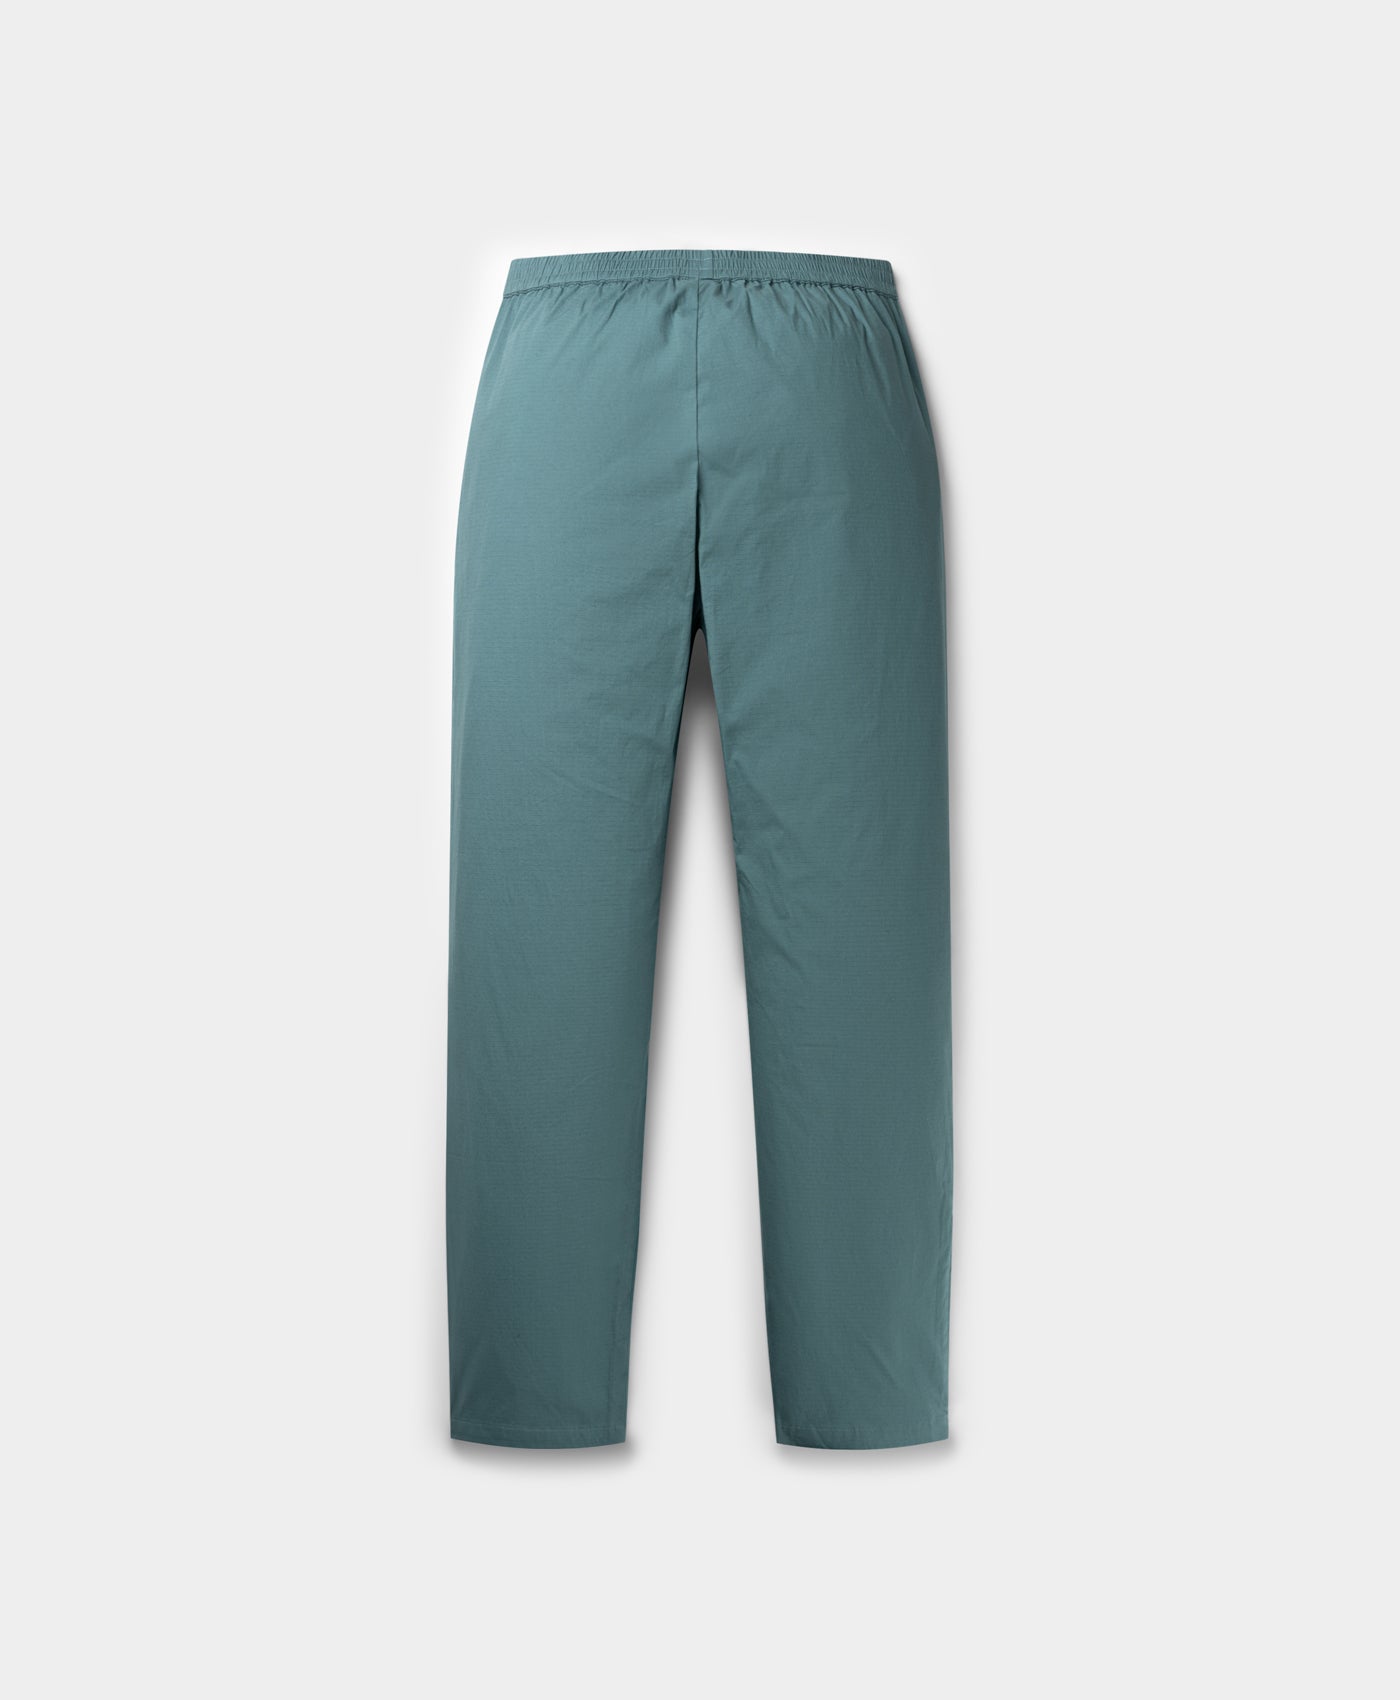 DP - Silver Green Halif Track Pants - Packshot - Rear